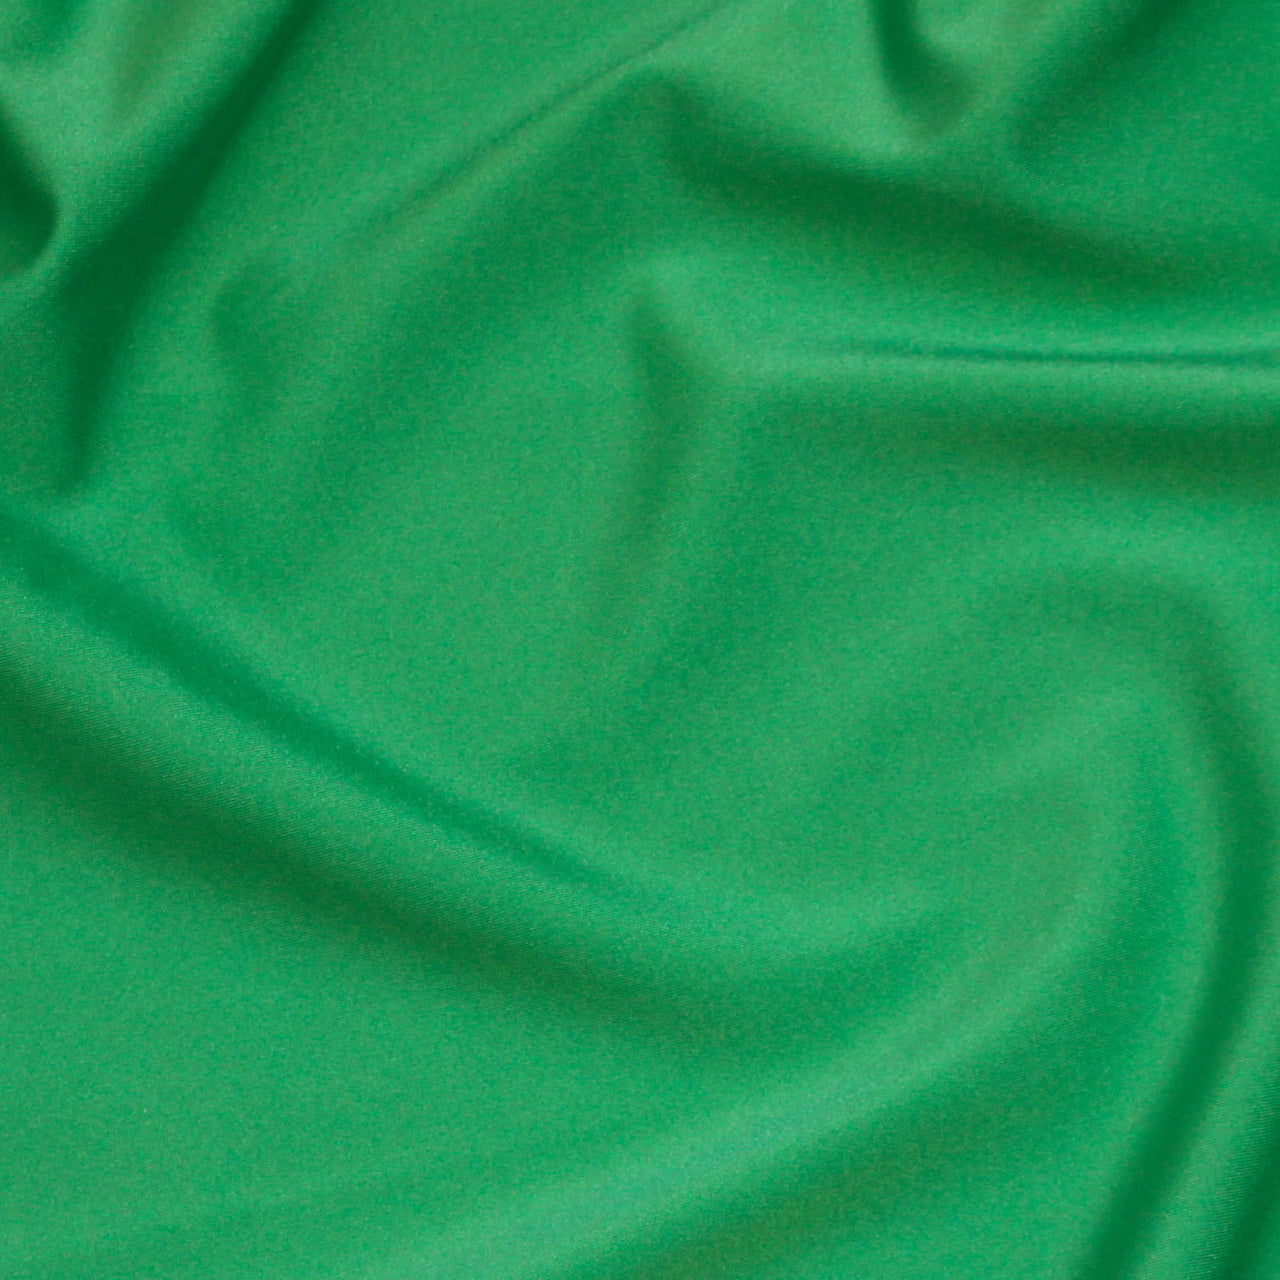 Emerald Green - Nylon Spandex Fabric - 4 Way All Way Stretch Superior Quality - Leotards, Dancewear